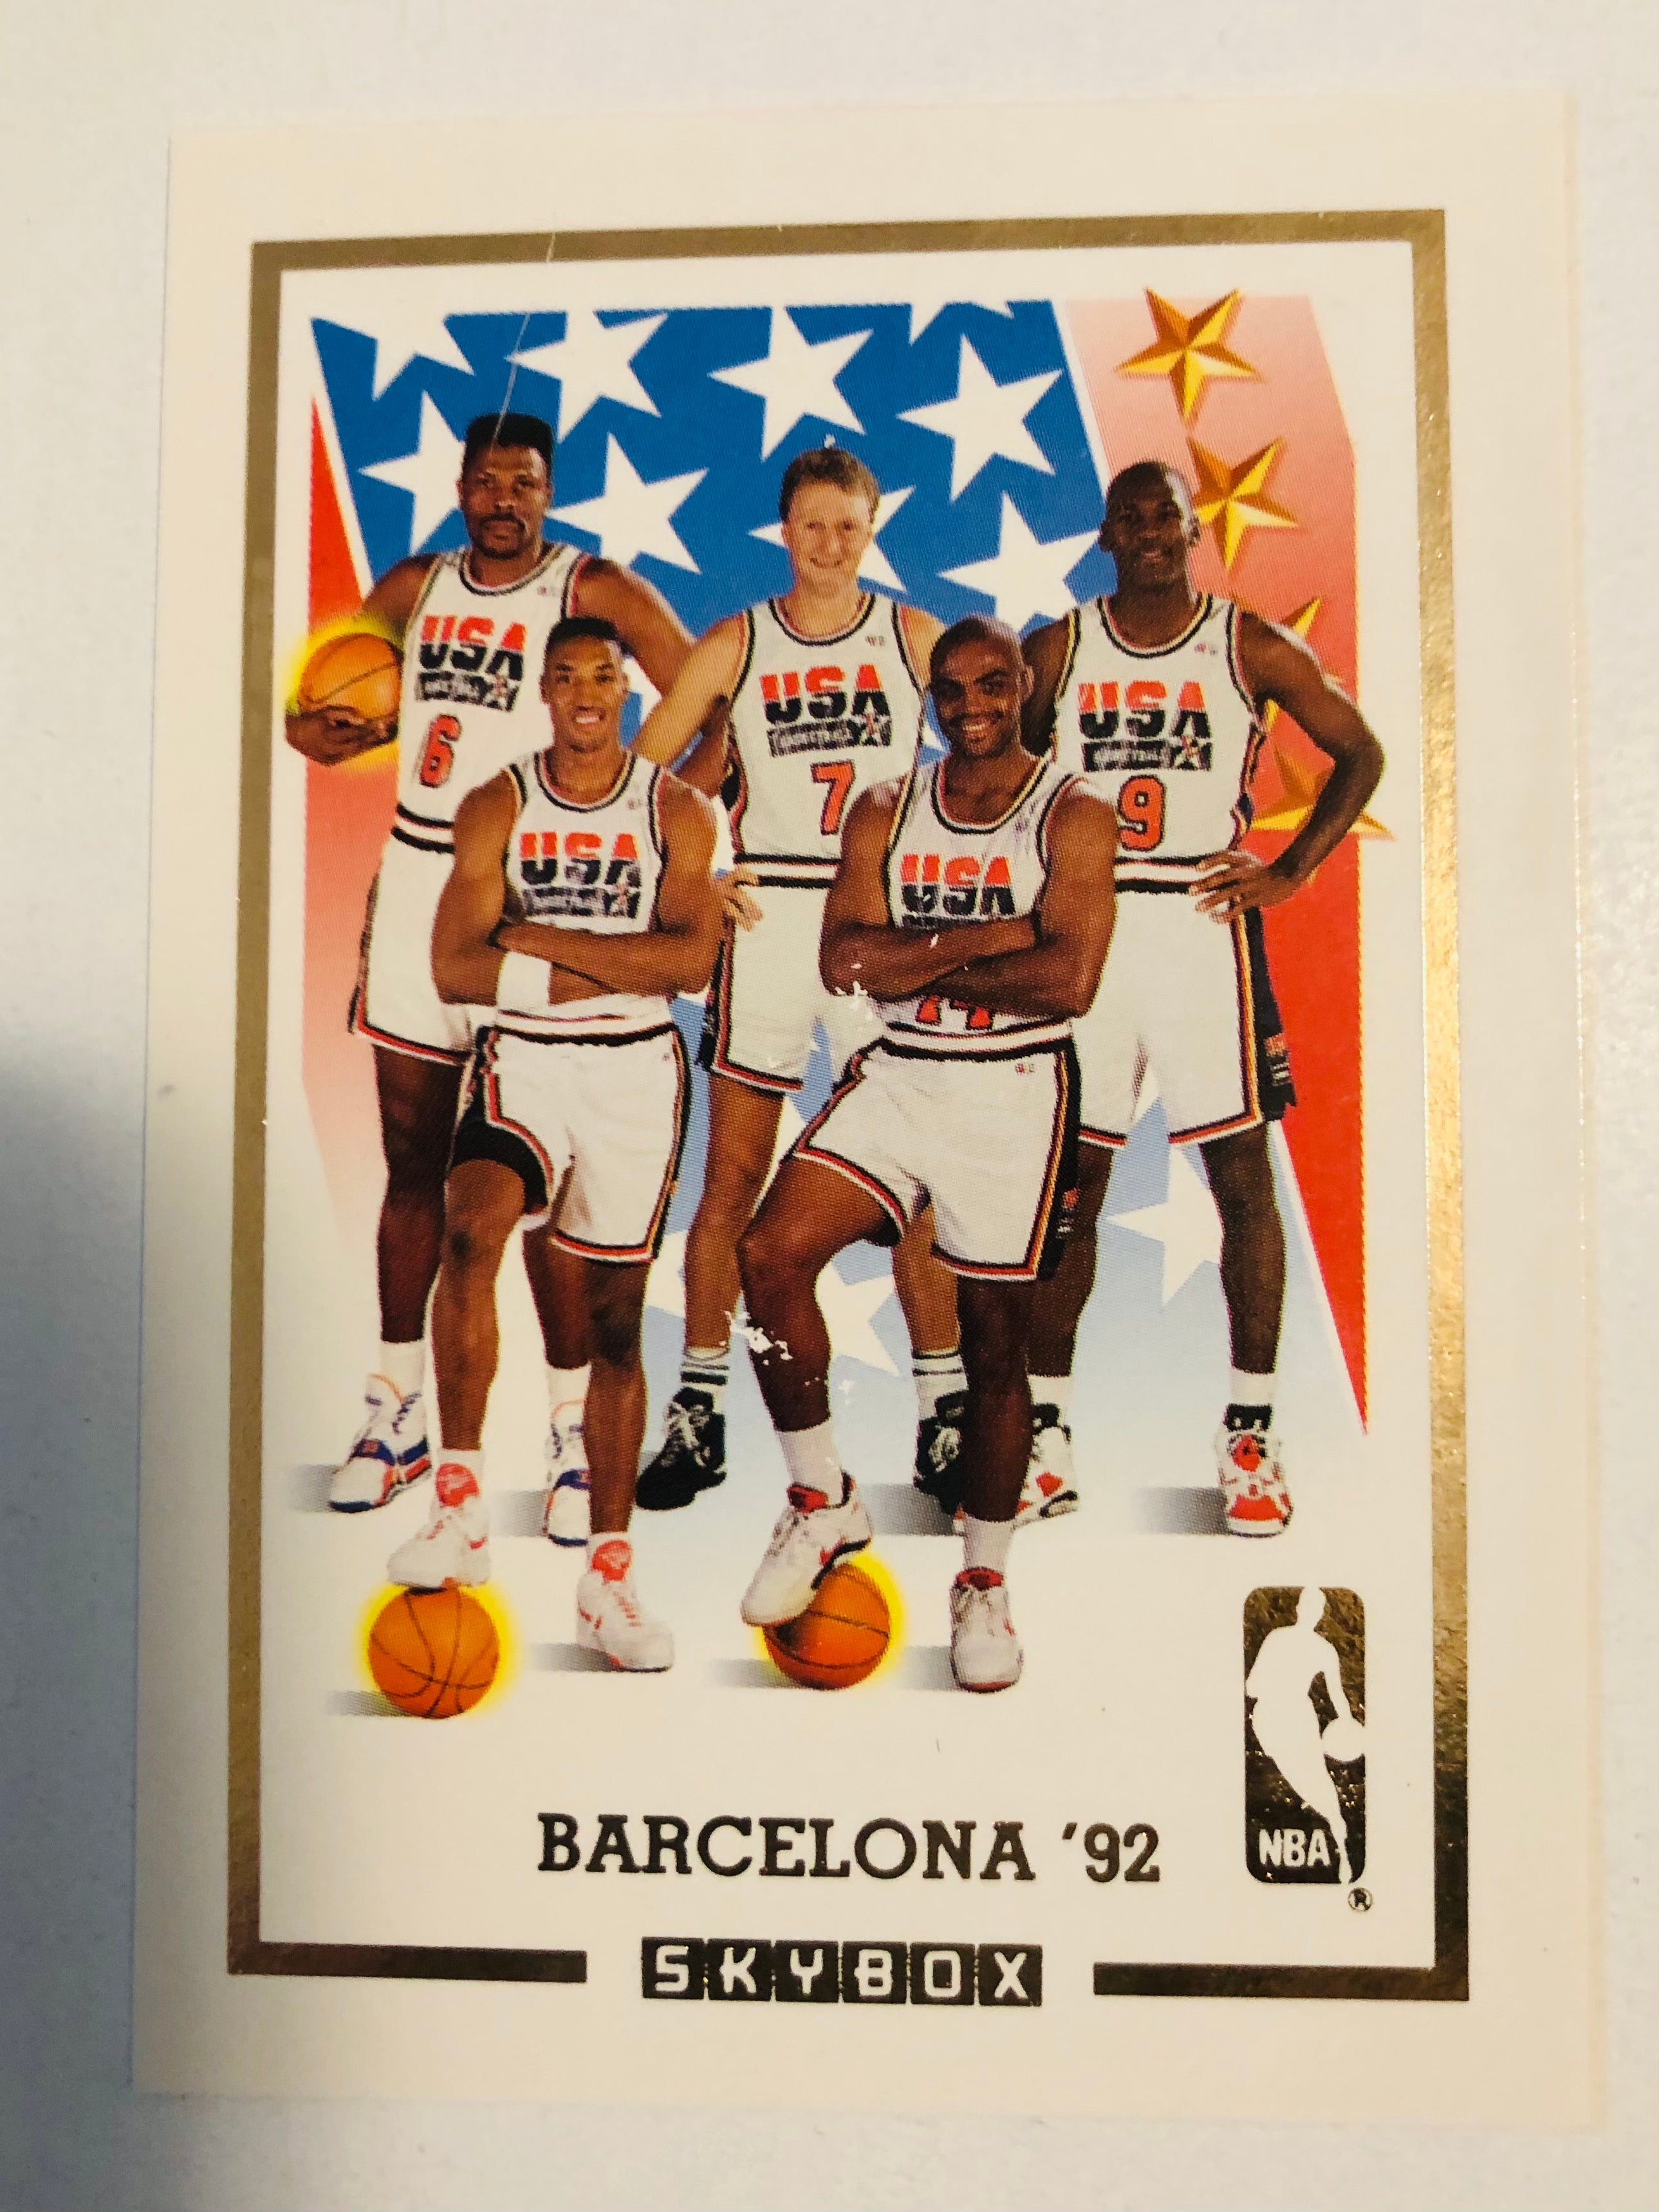 NBA Skybox Olympic Michael Jordan basketball team insert card 1992